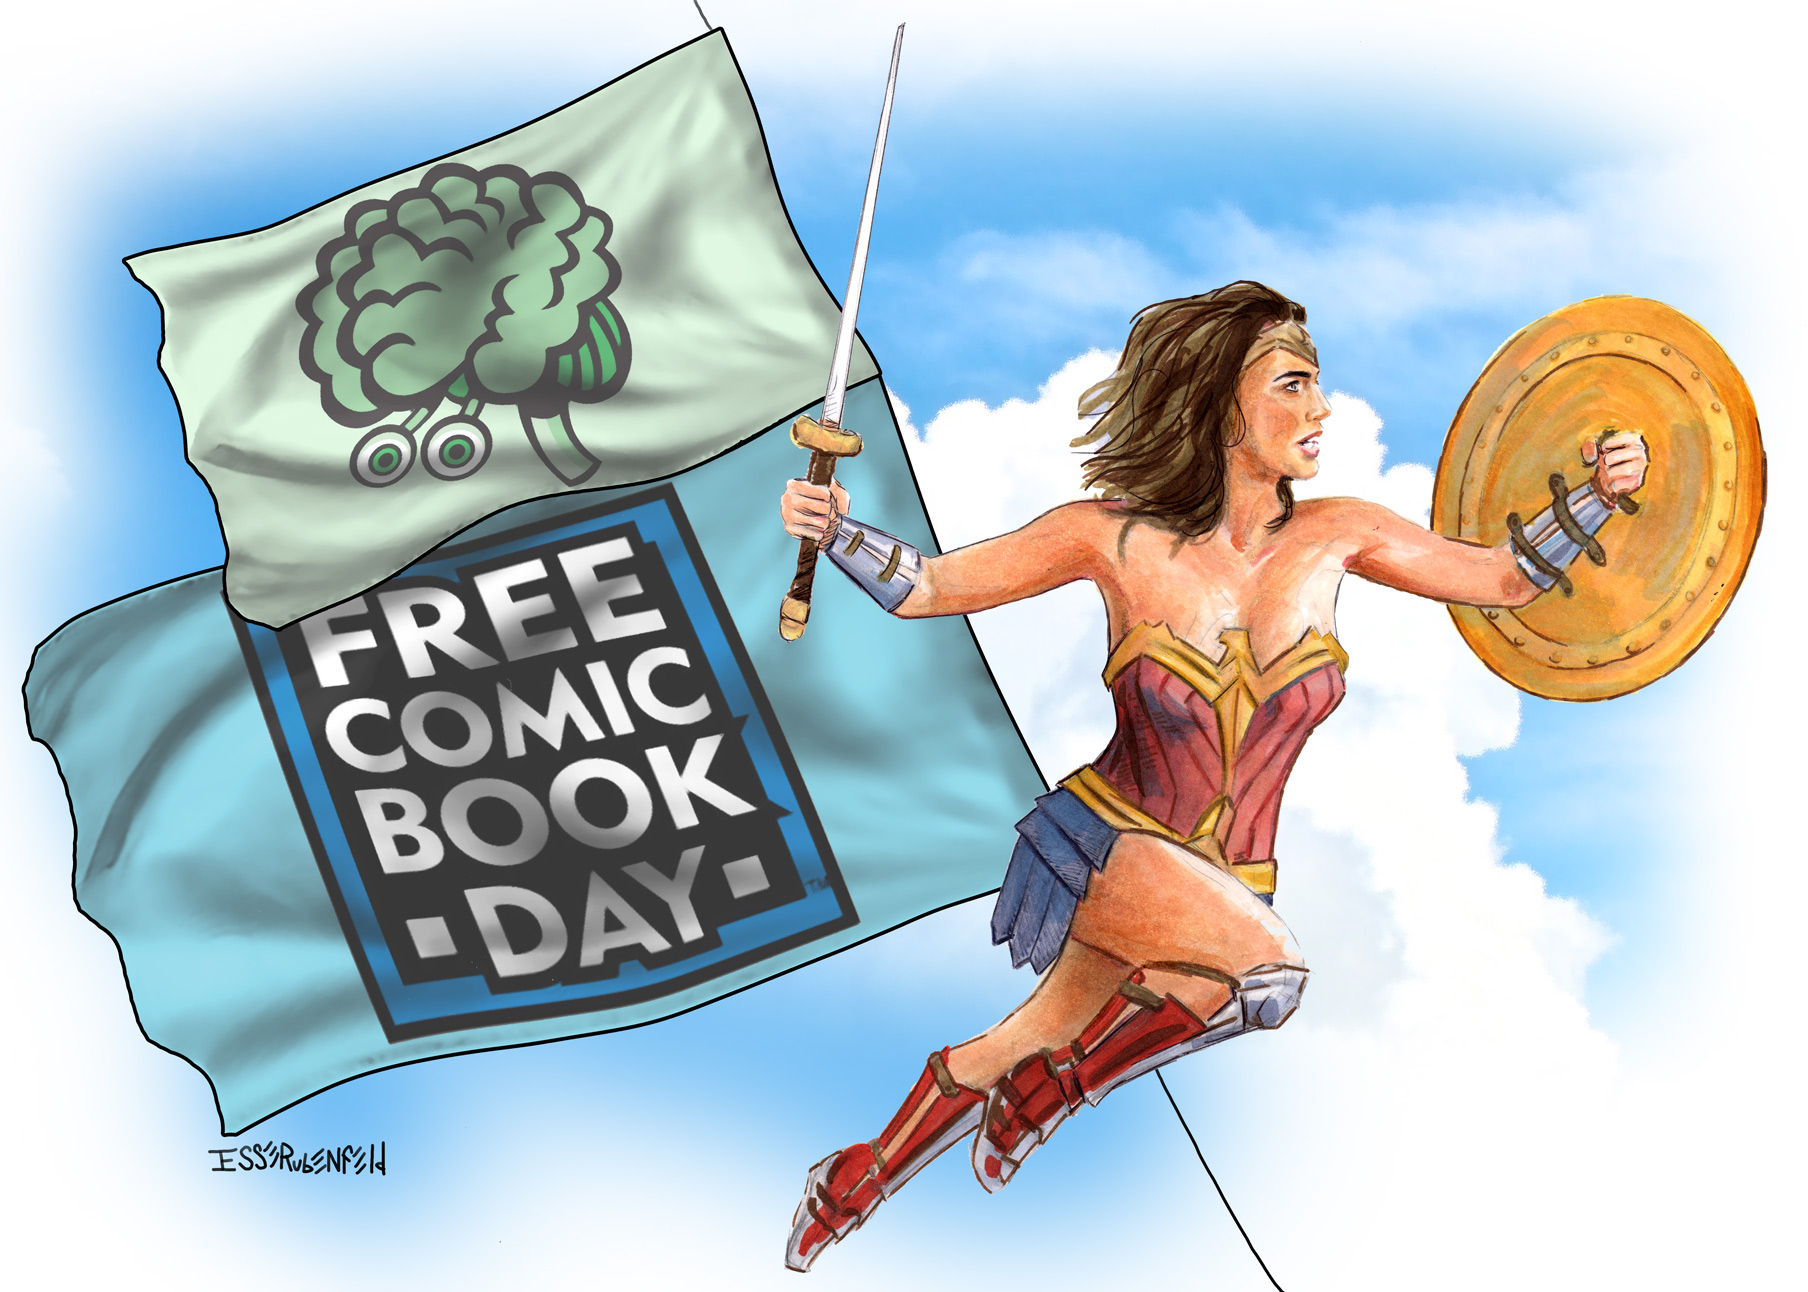 Green Brain Comics Free Comic Day 2017 Poster